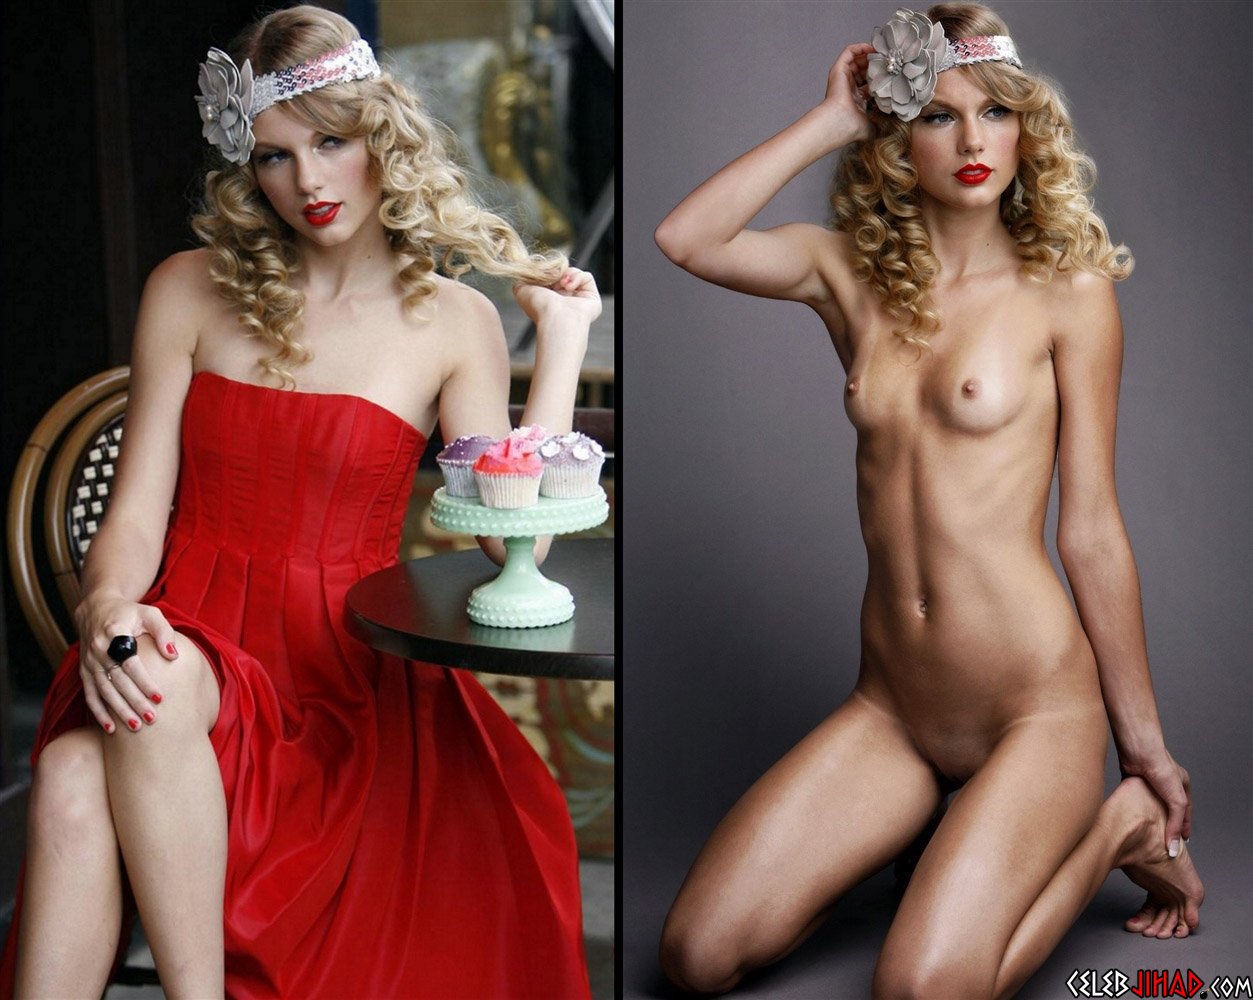 Taylor swifr nude